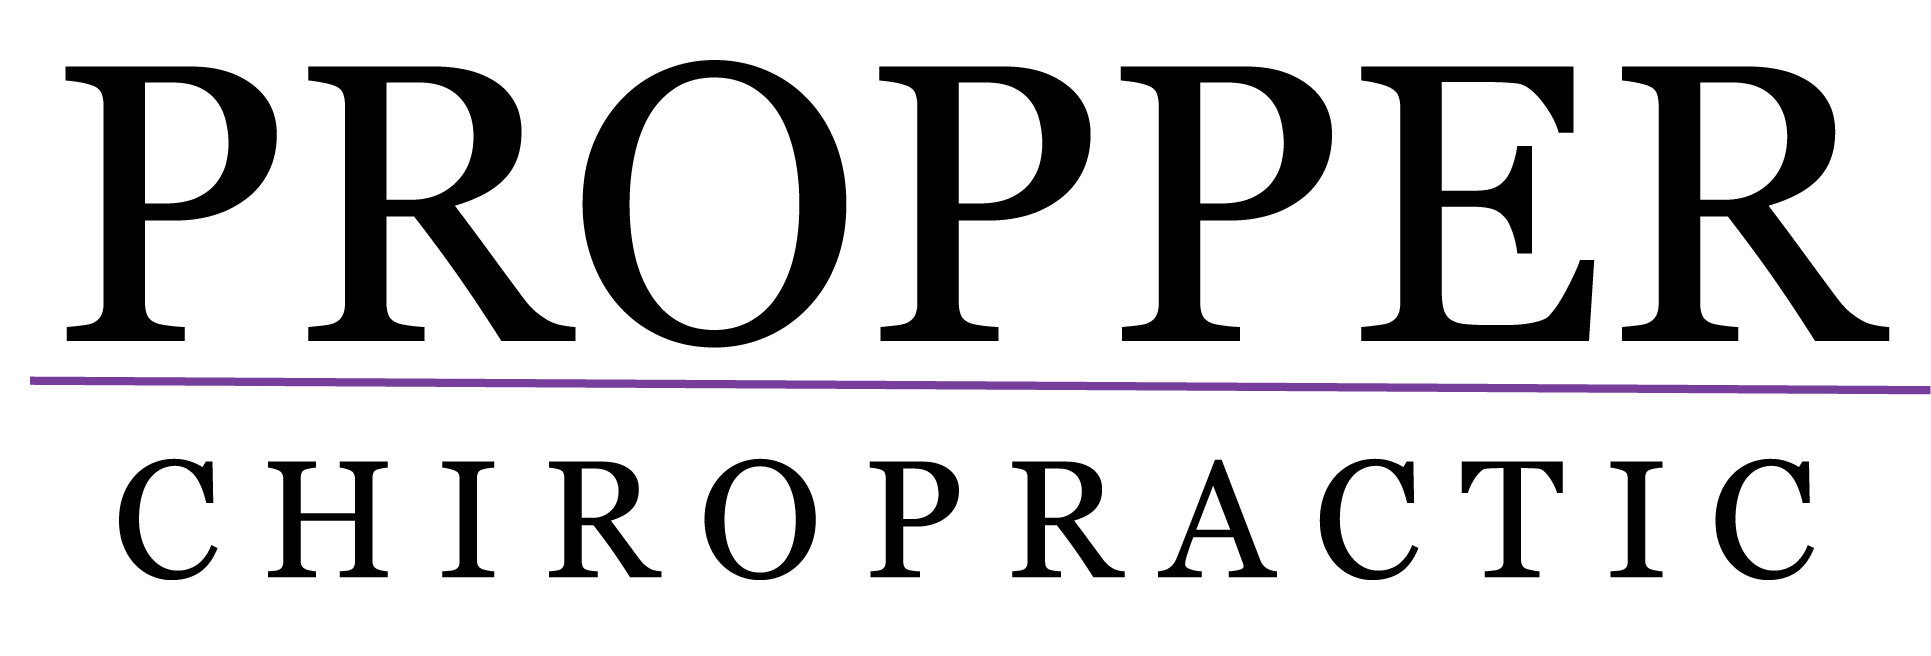 Propper Chiropractic LLC